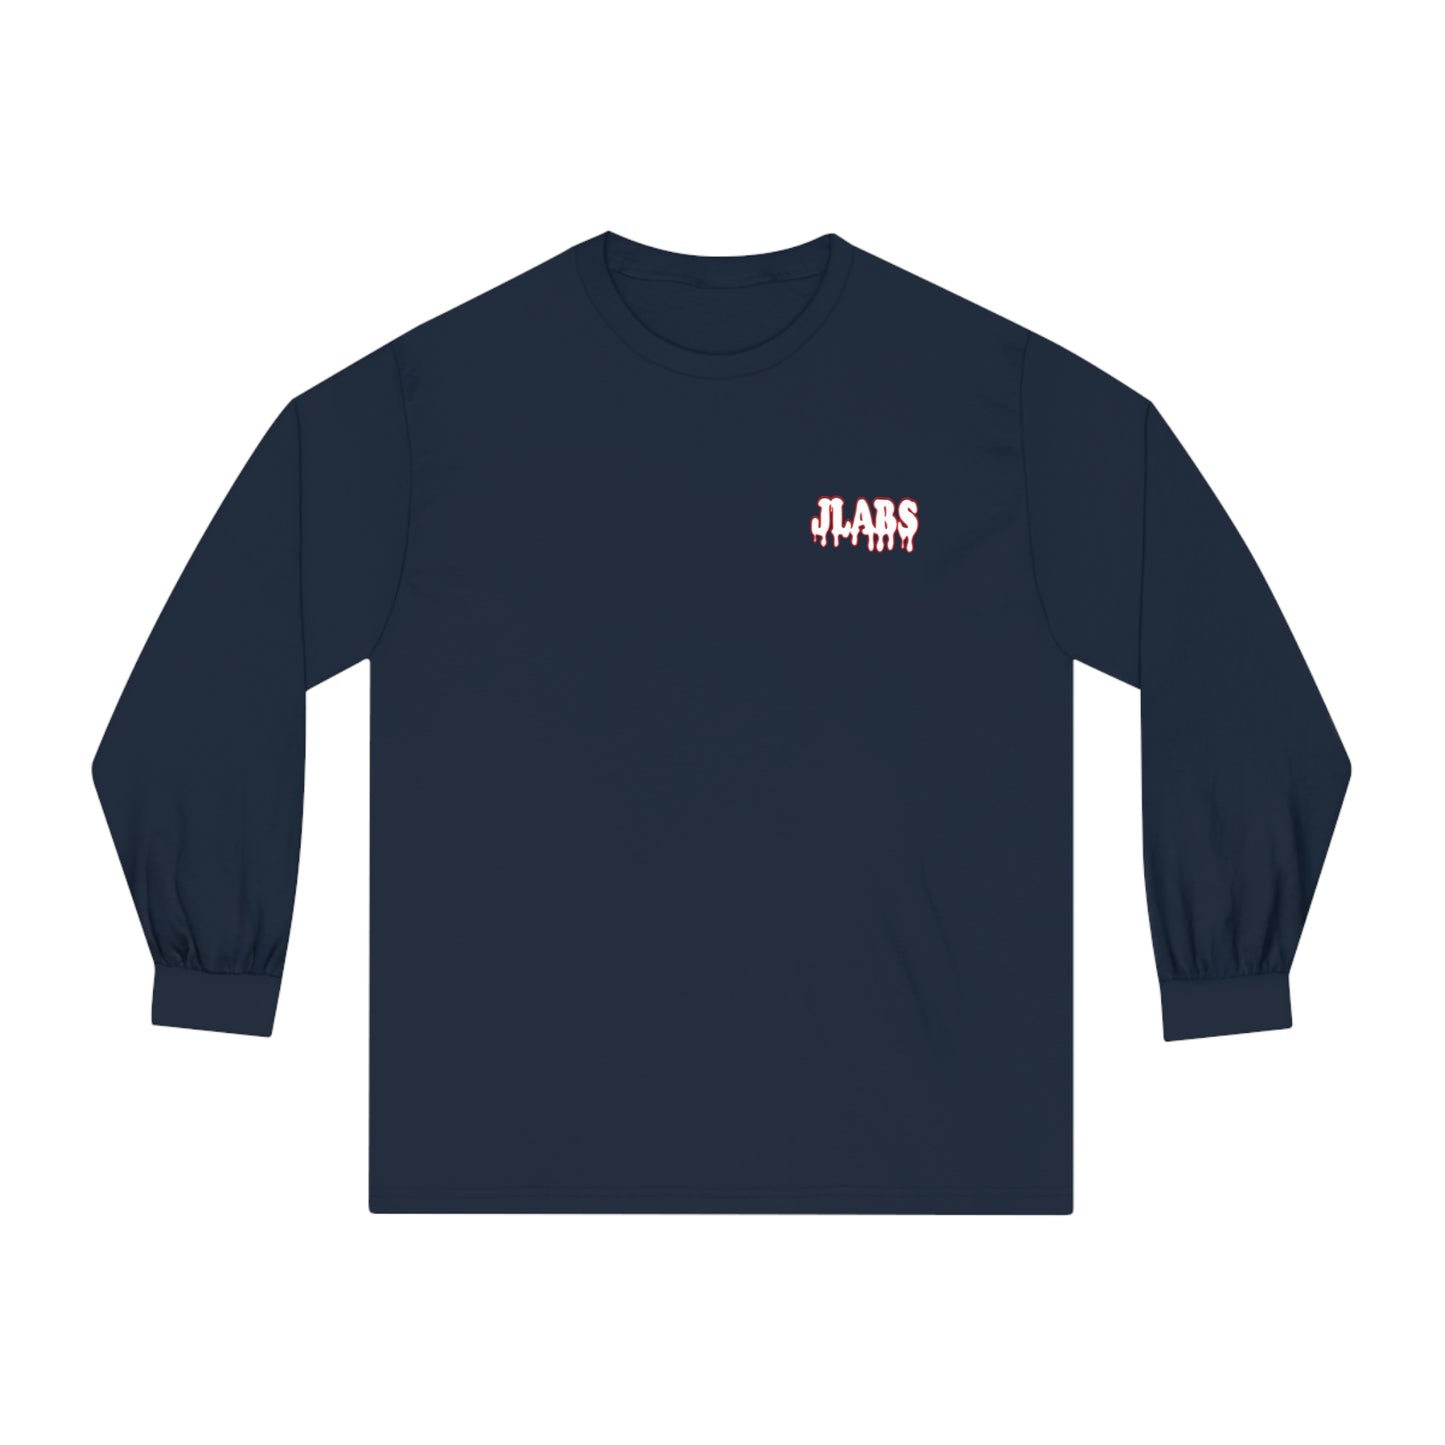 Jlabs Classic Long Sleeve T-Shirt